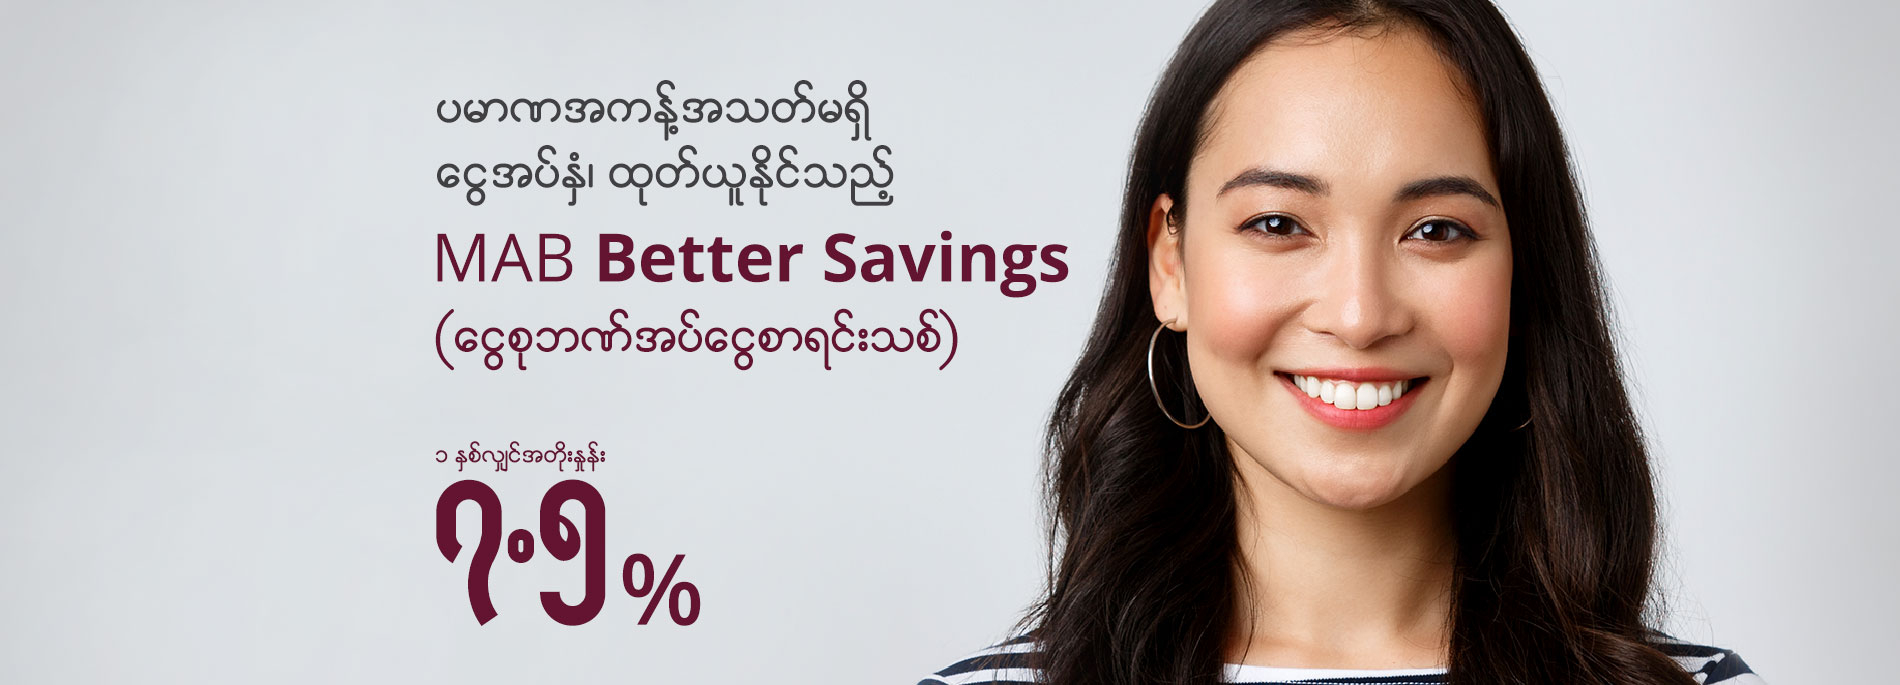 MAB-Better-Savings_Web-Banner